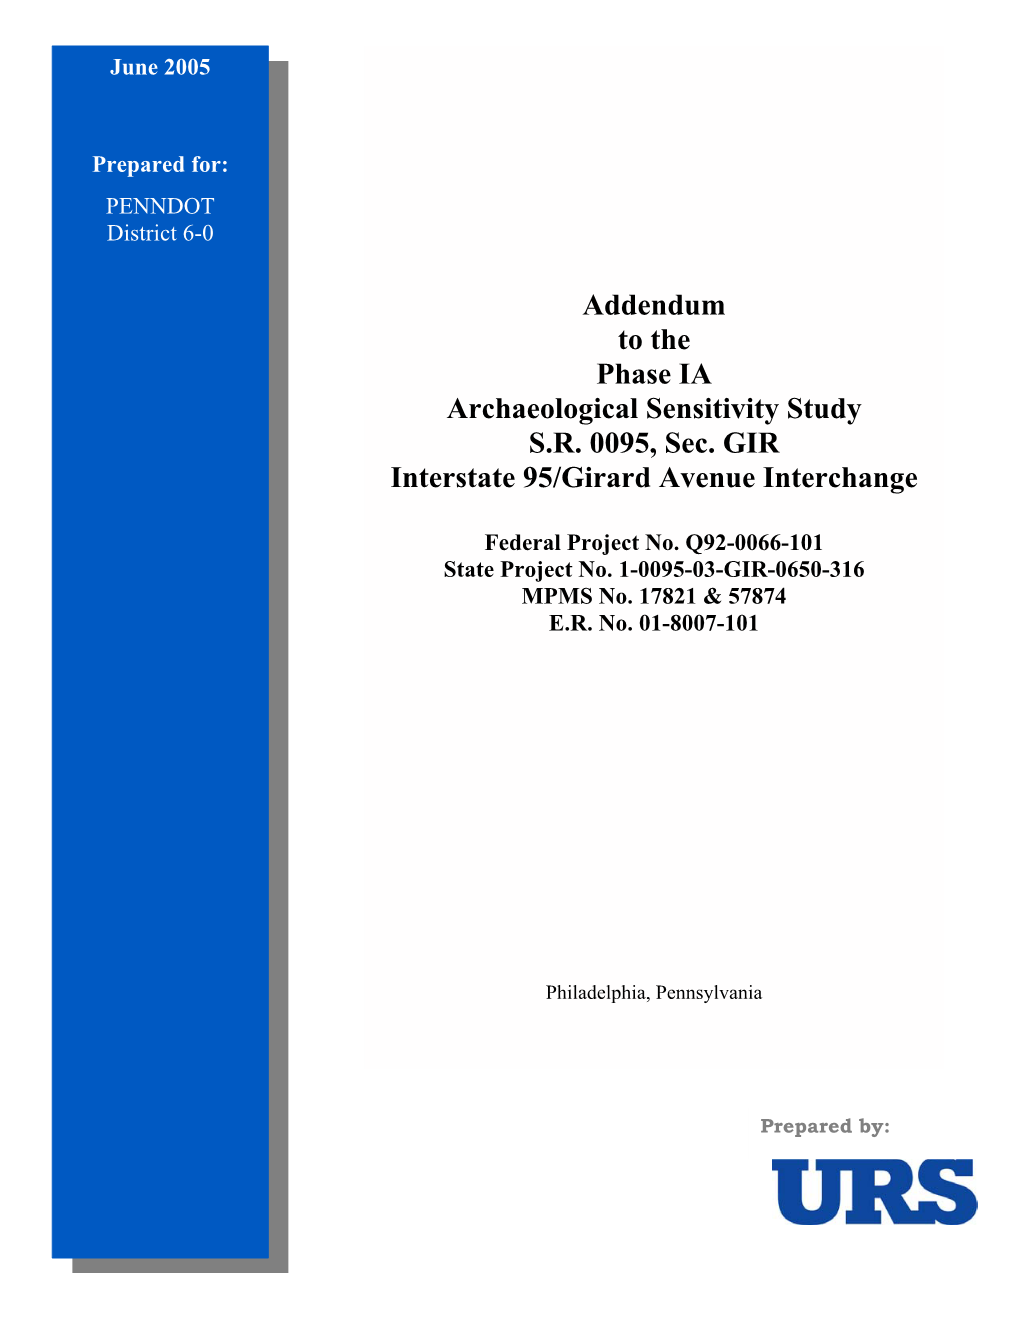 Addendum to the Phase IA Archaeological Sensitivity Study S.R